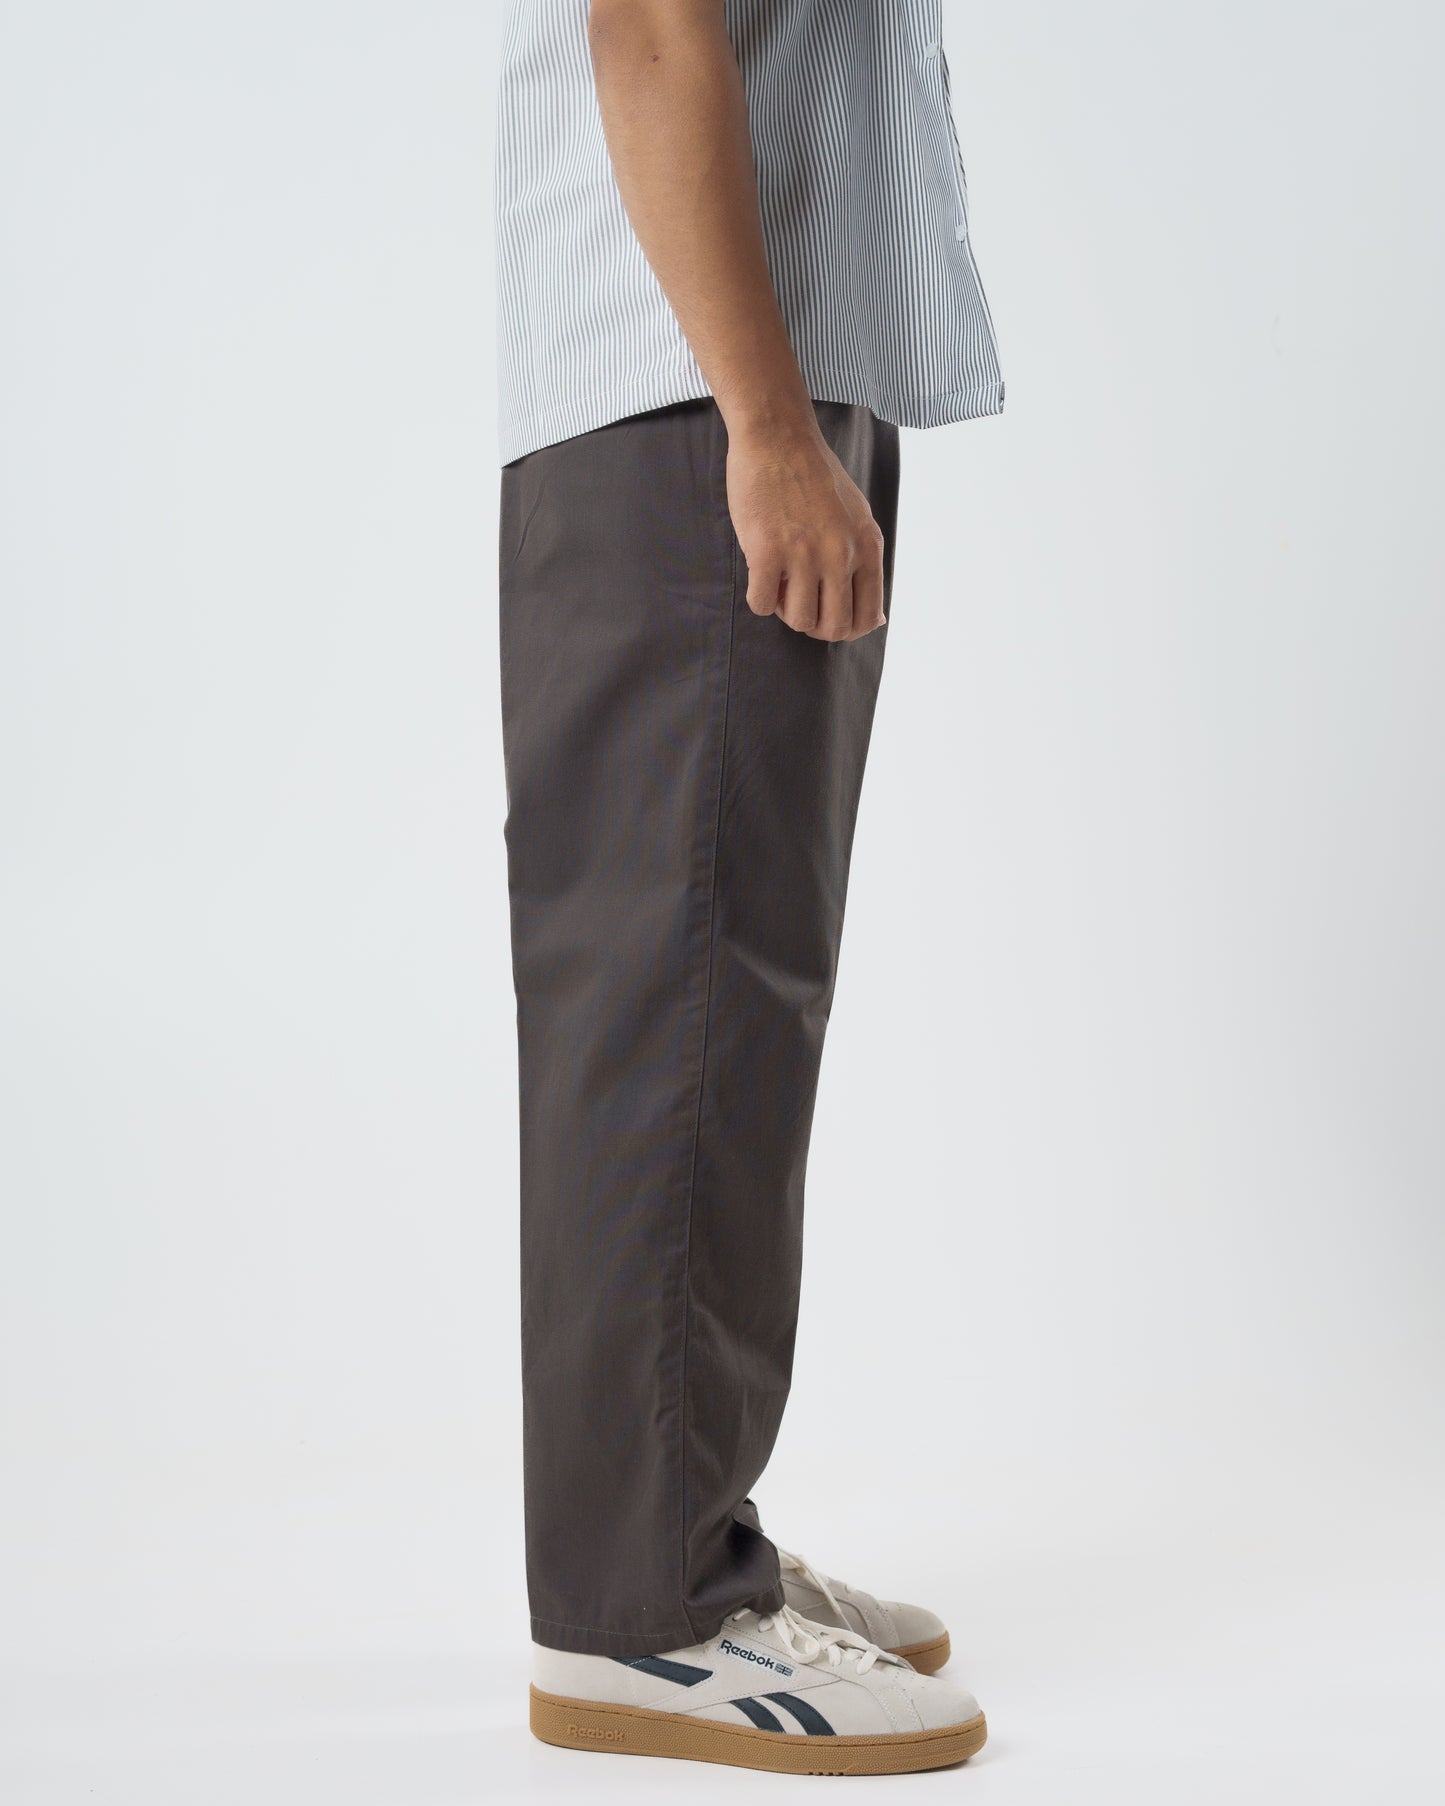 TTO Pants (Charcoal)